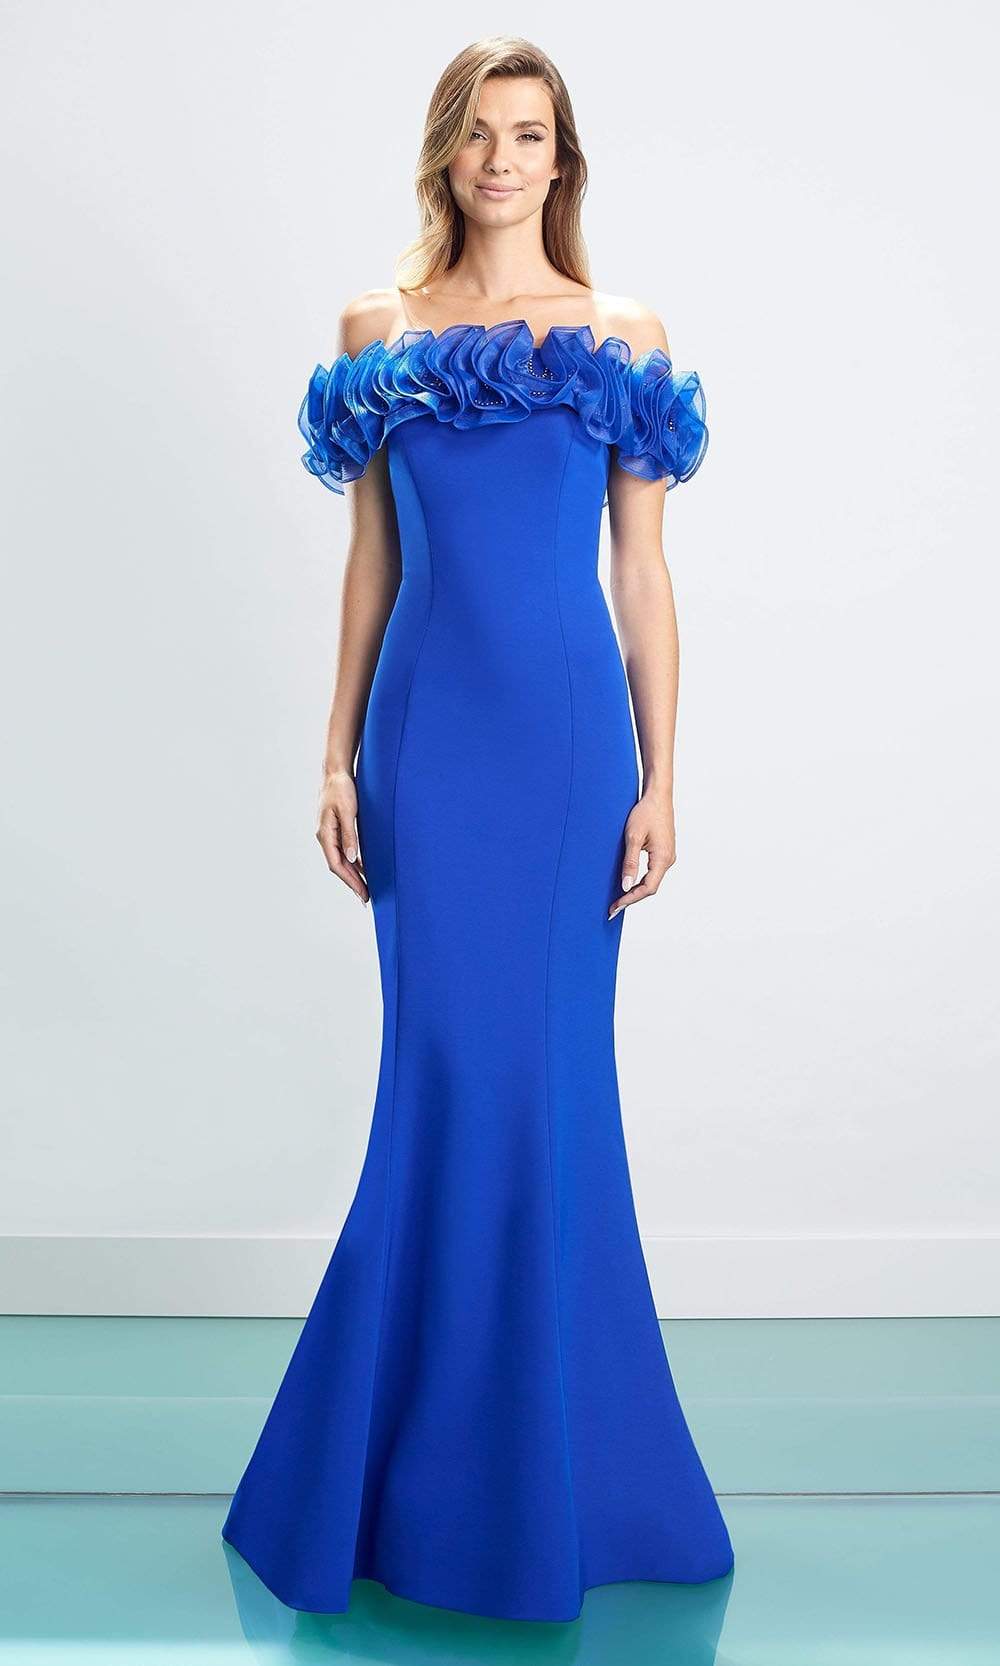 Alexander by Daymor - Ruffle Ornate Mermaid Evening Dress 1461 In Blue